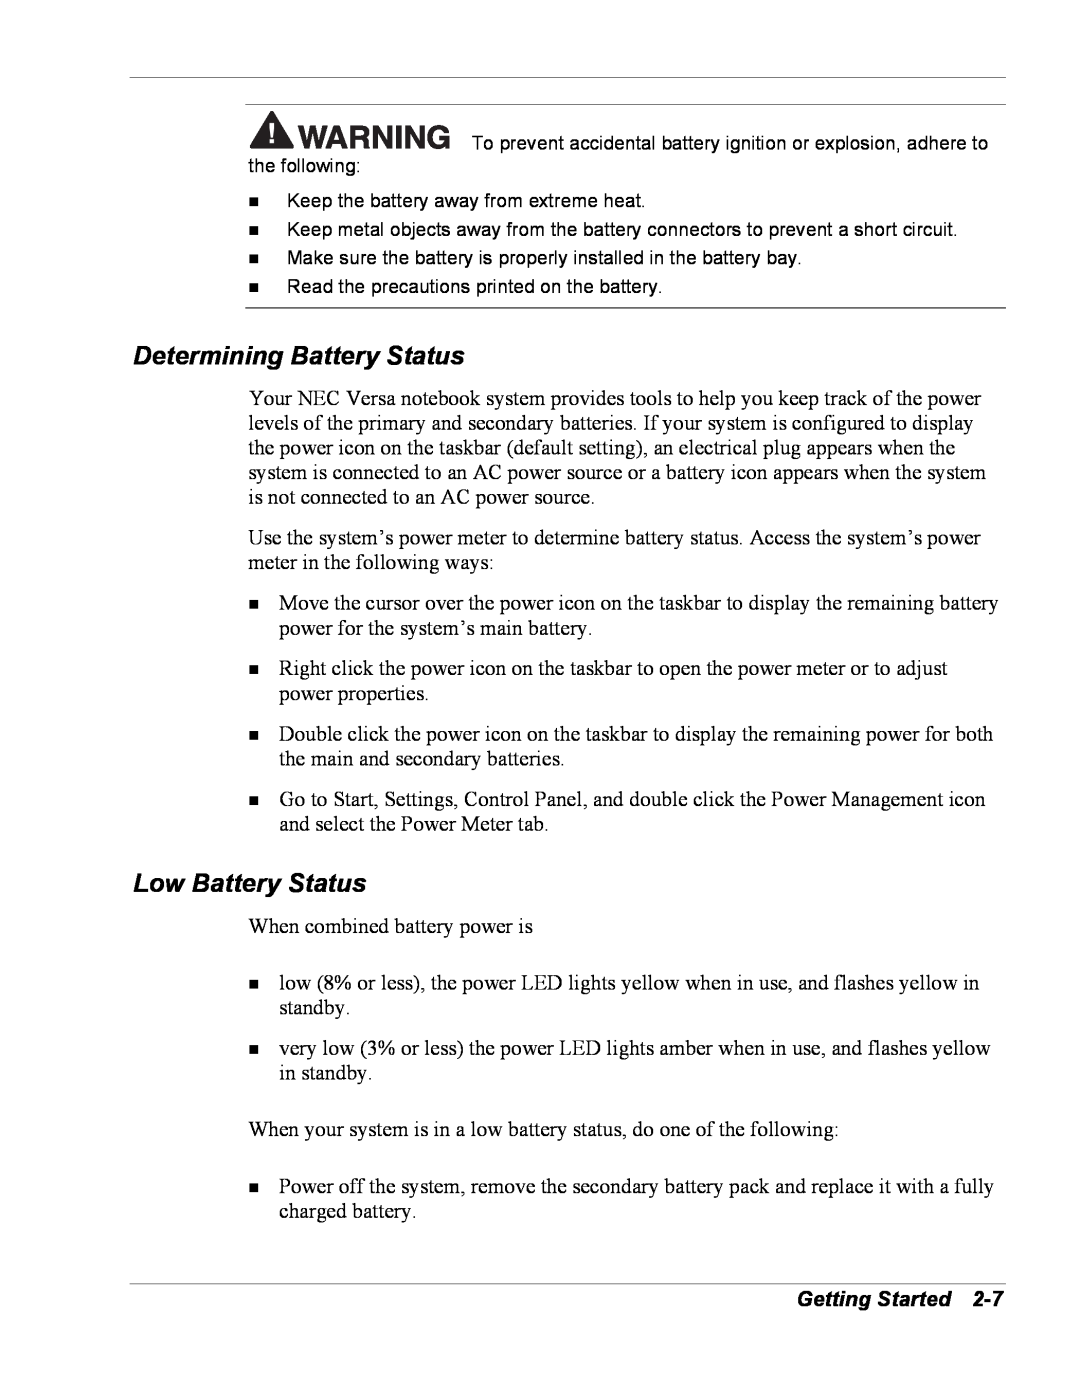 NEC Versa Series manual Determining Battery Status, Low Battery Status, Getting Started 